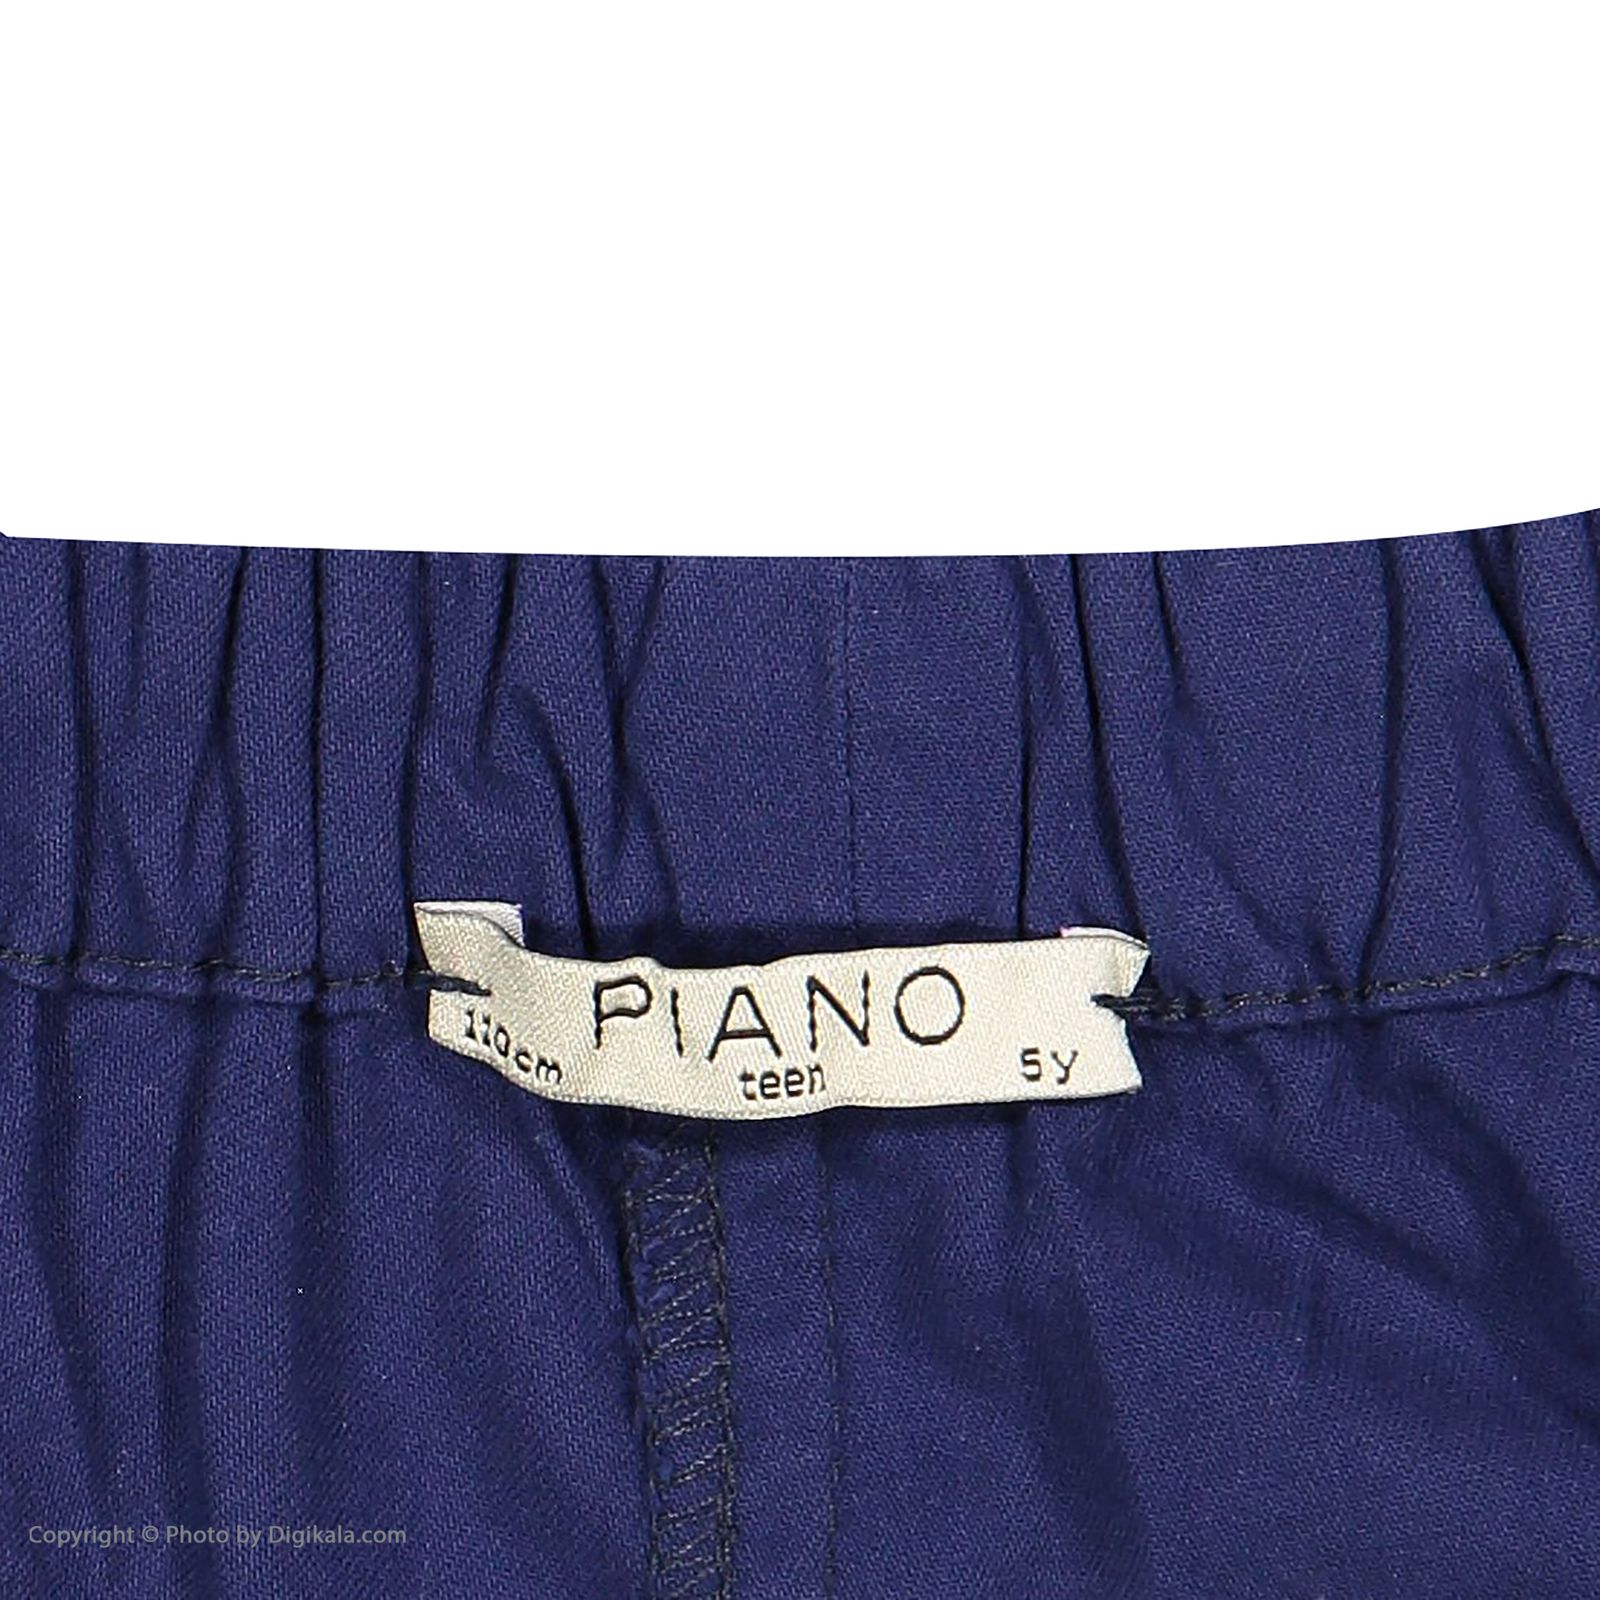 شلوارک دخترانه پیانو مدل 10120-59R -  - 5